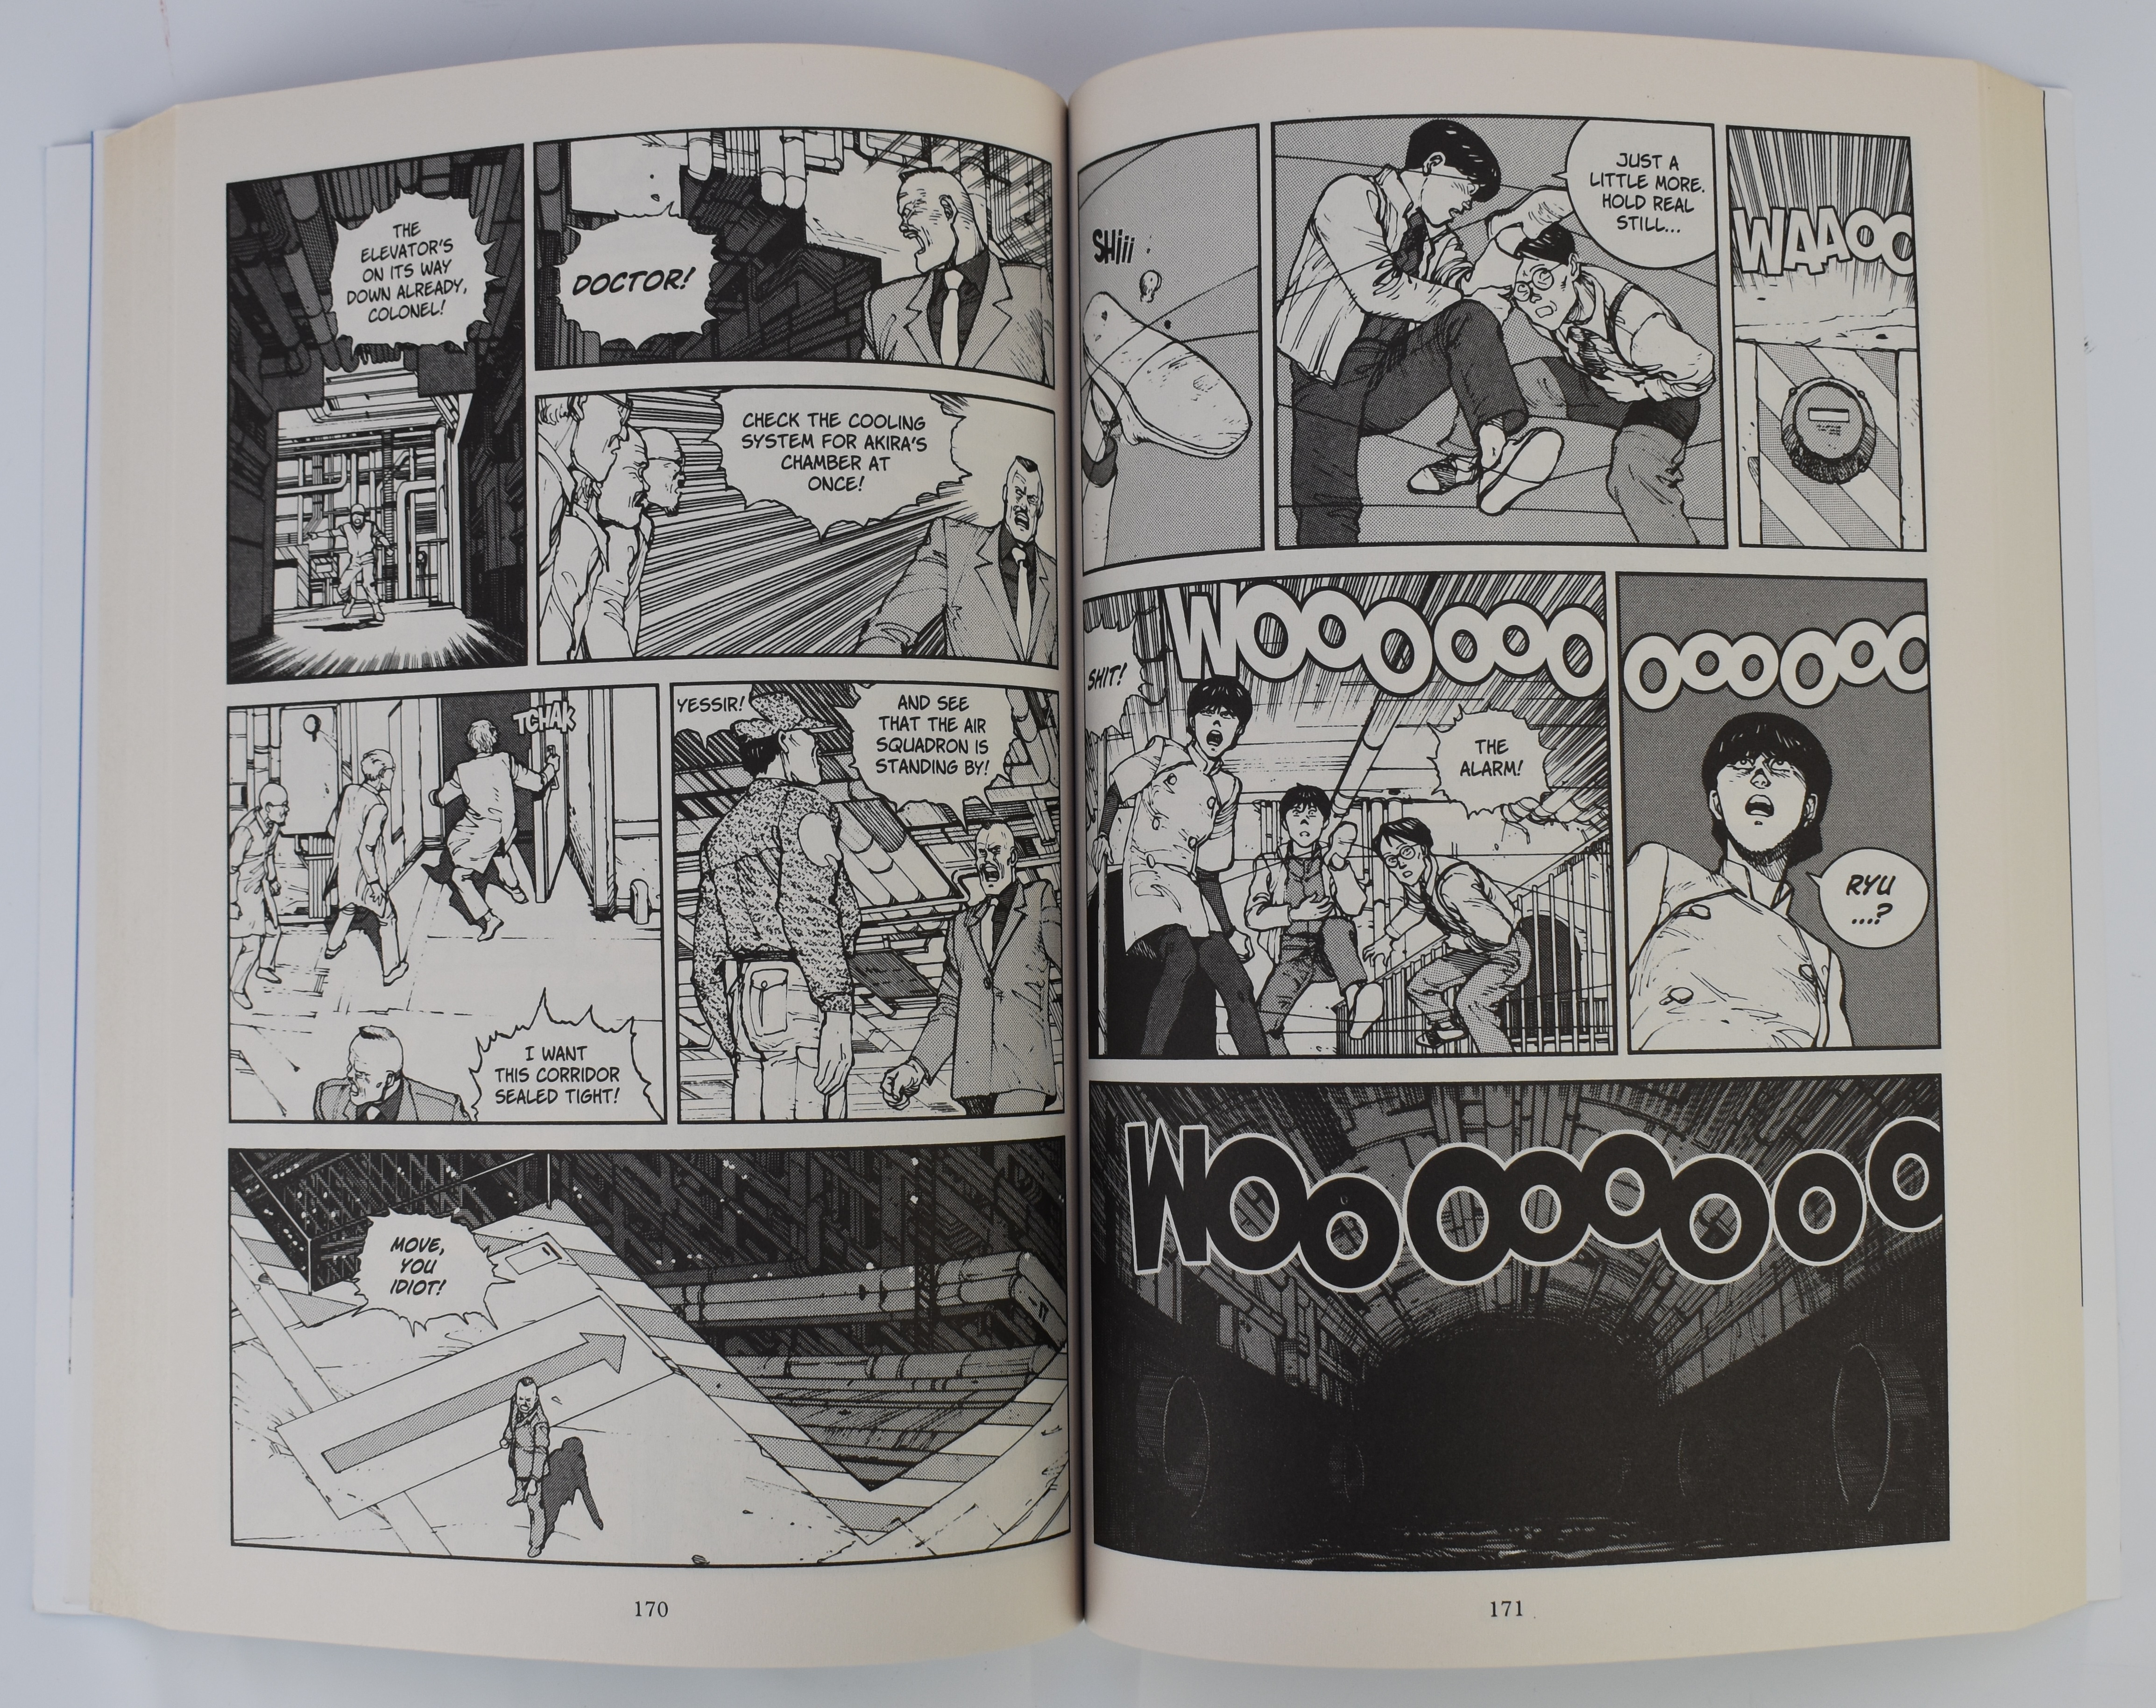 Akira volumes 1-6 by Katsuhiro Otomo published by Dark Horse Comics. - Image 3 of 3